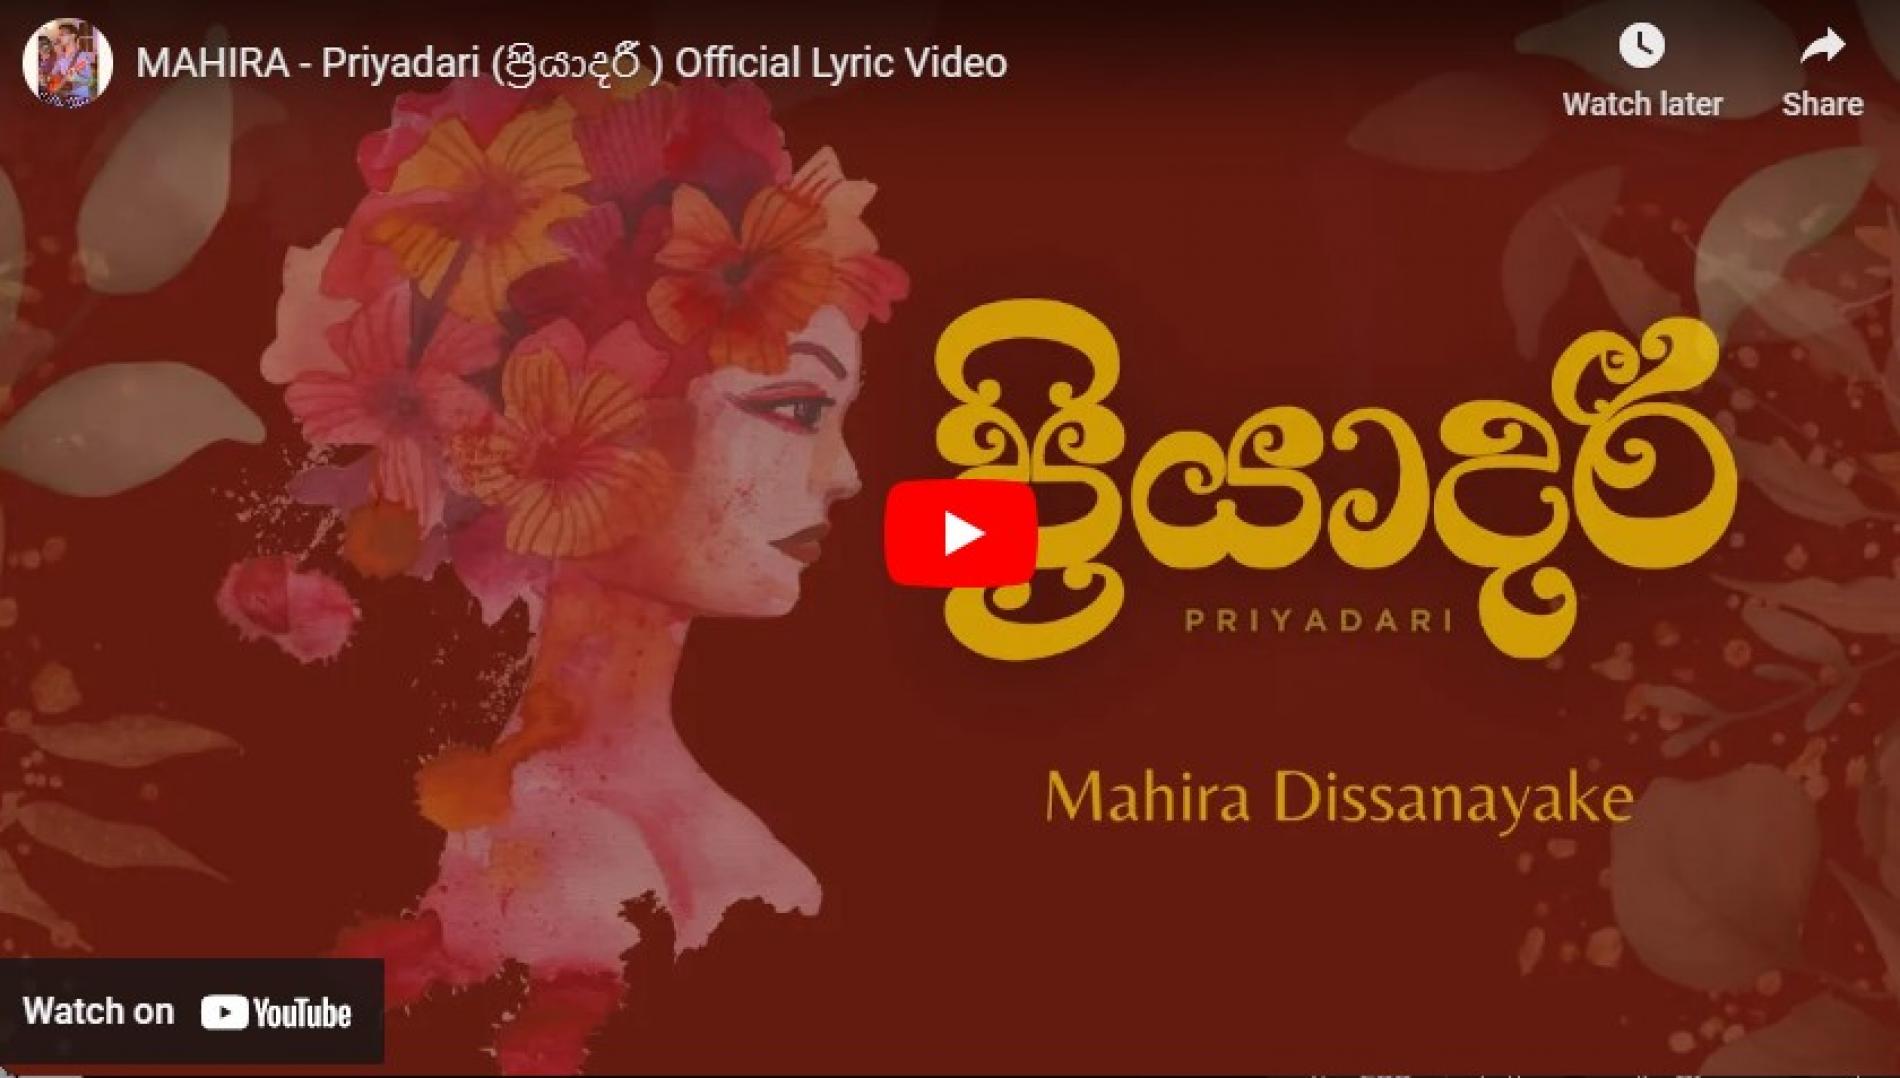 New Music : MAHIRA – Priyadari (ප්‍රියාදරී ) Official Lyric Video